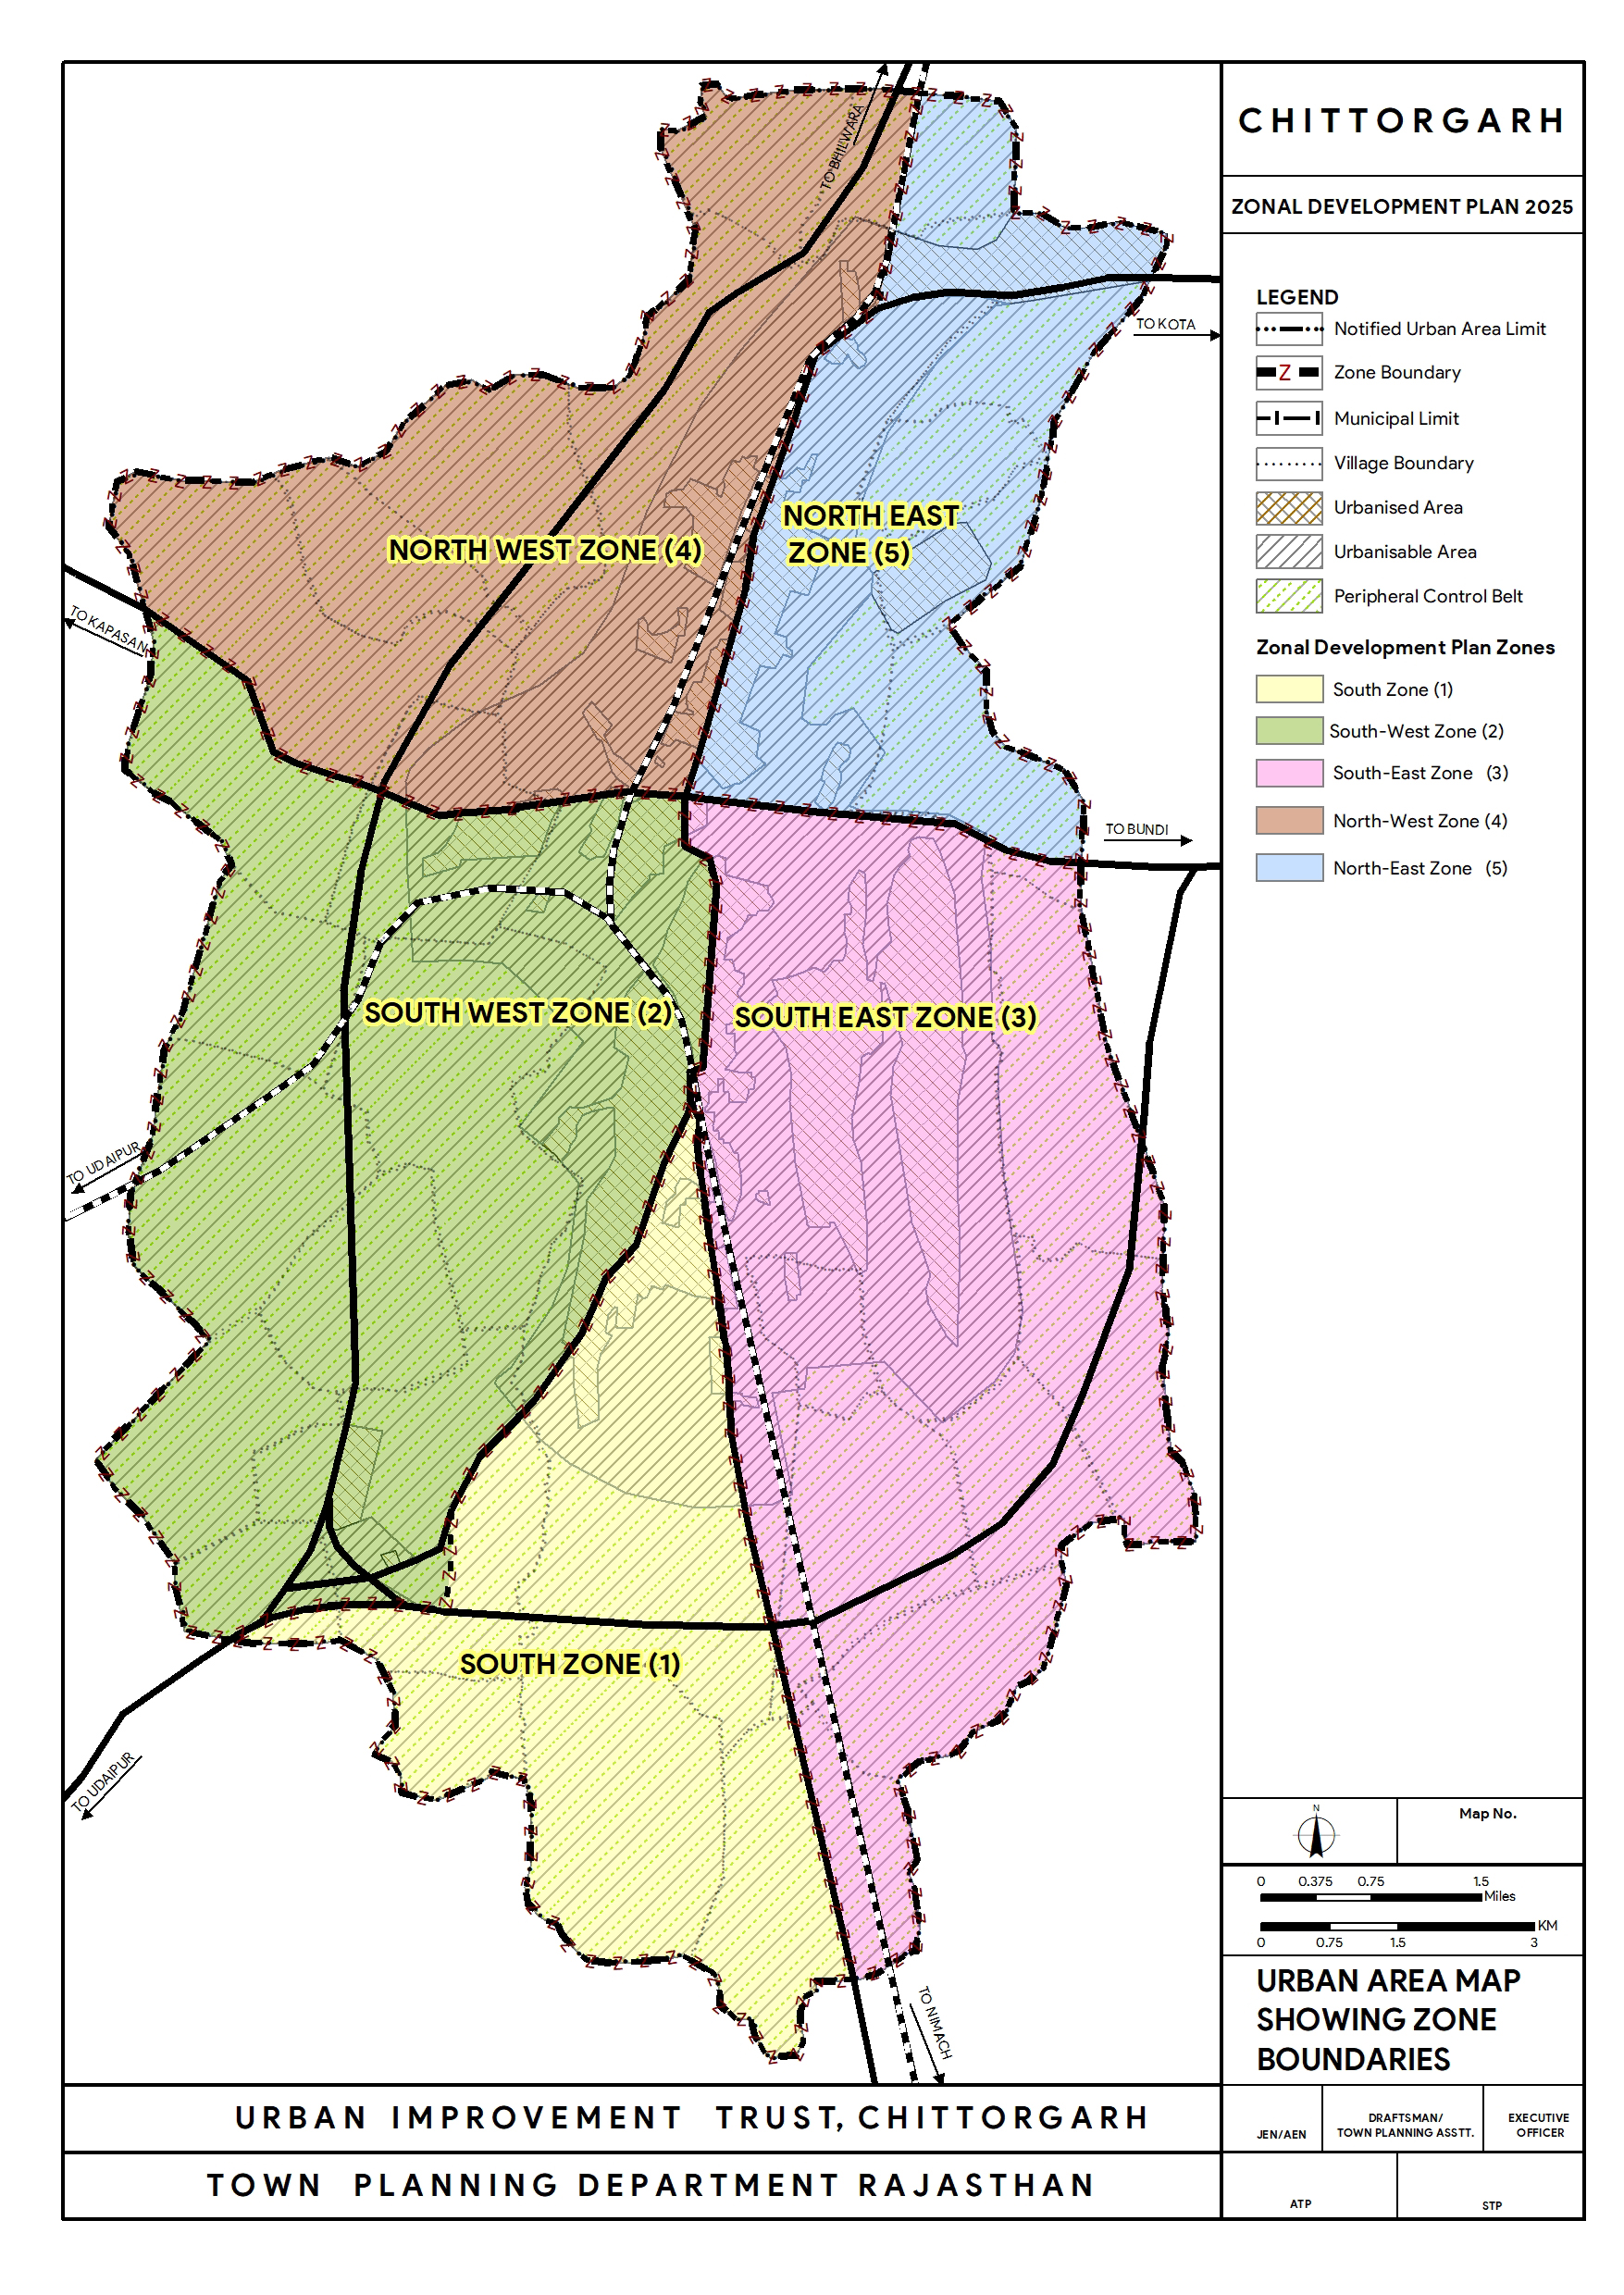 urban area map showing zone boundaries in chittorgarh